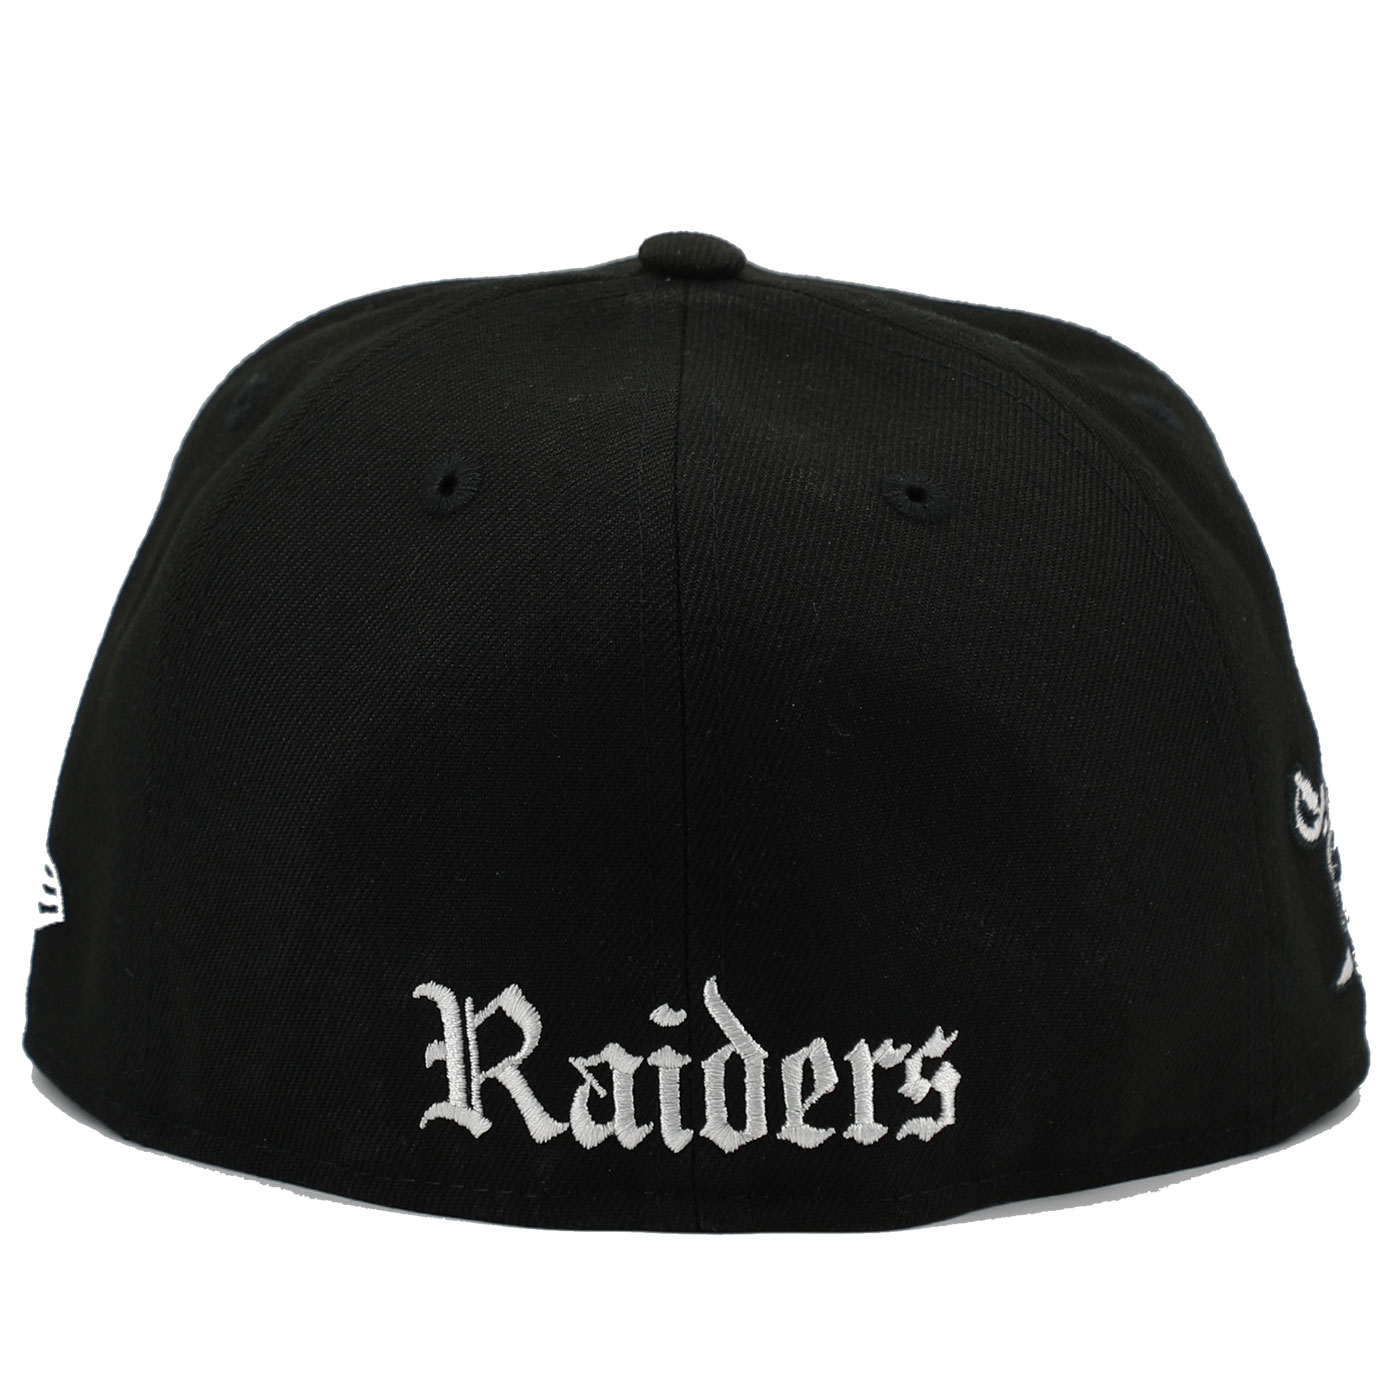 Las Vegas Raiders New Era Gothic Script 9FIFTY Snapback Hat - Black